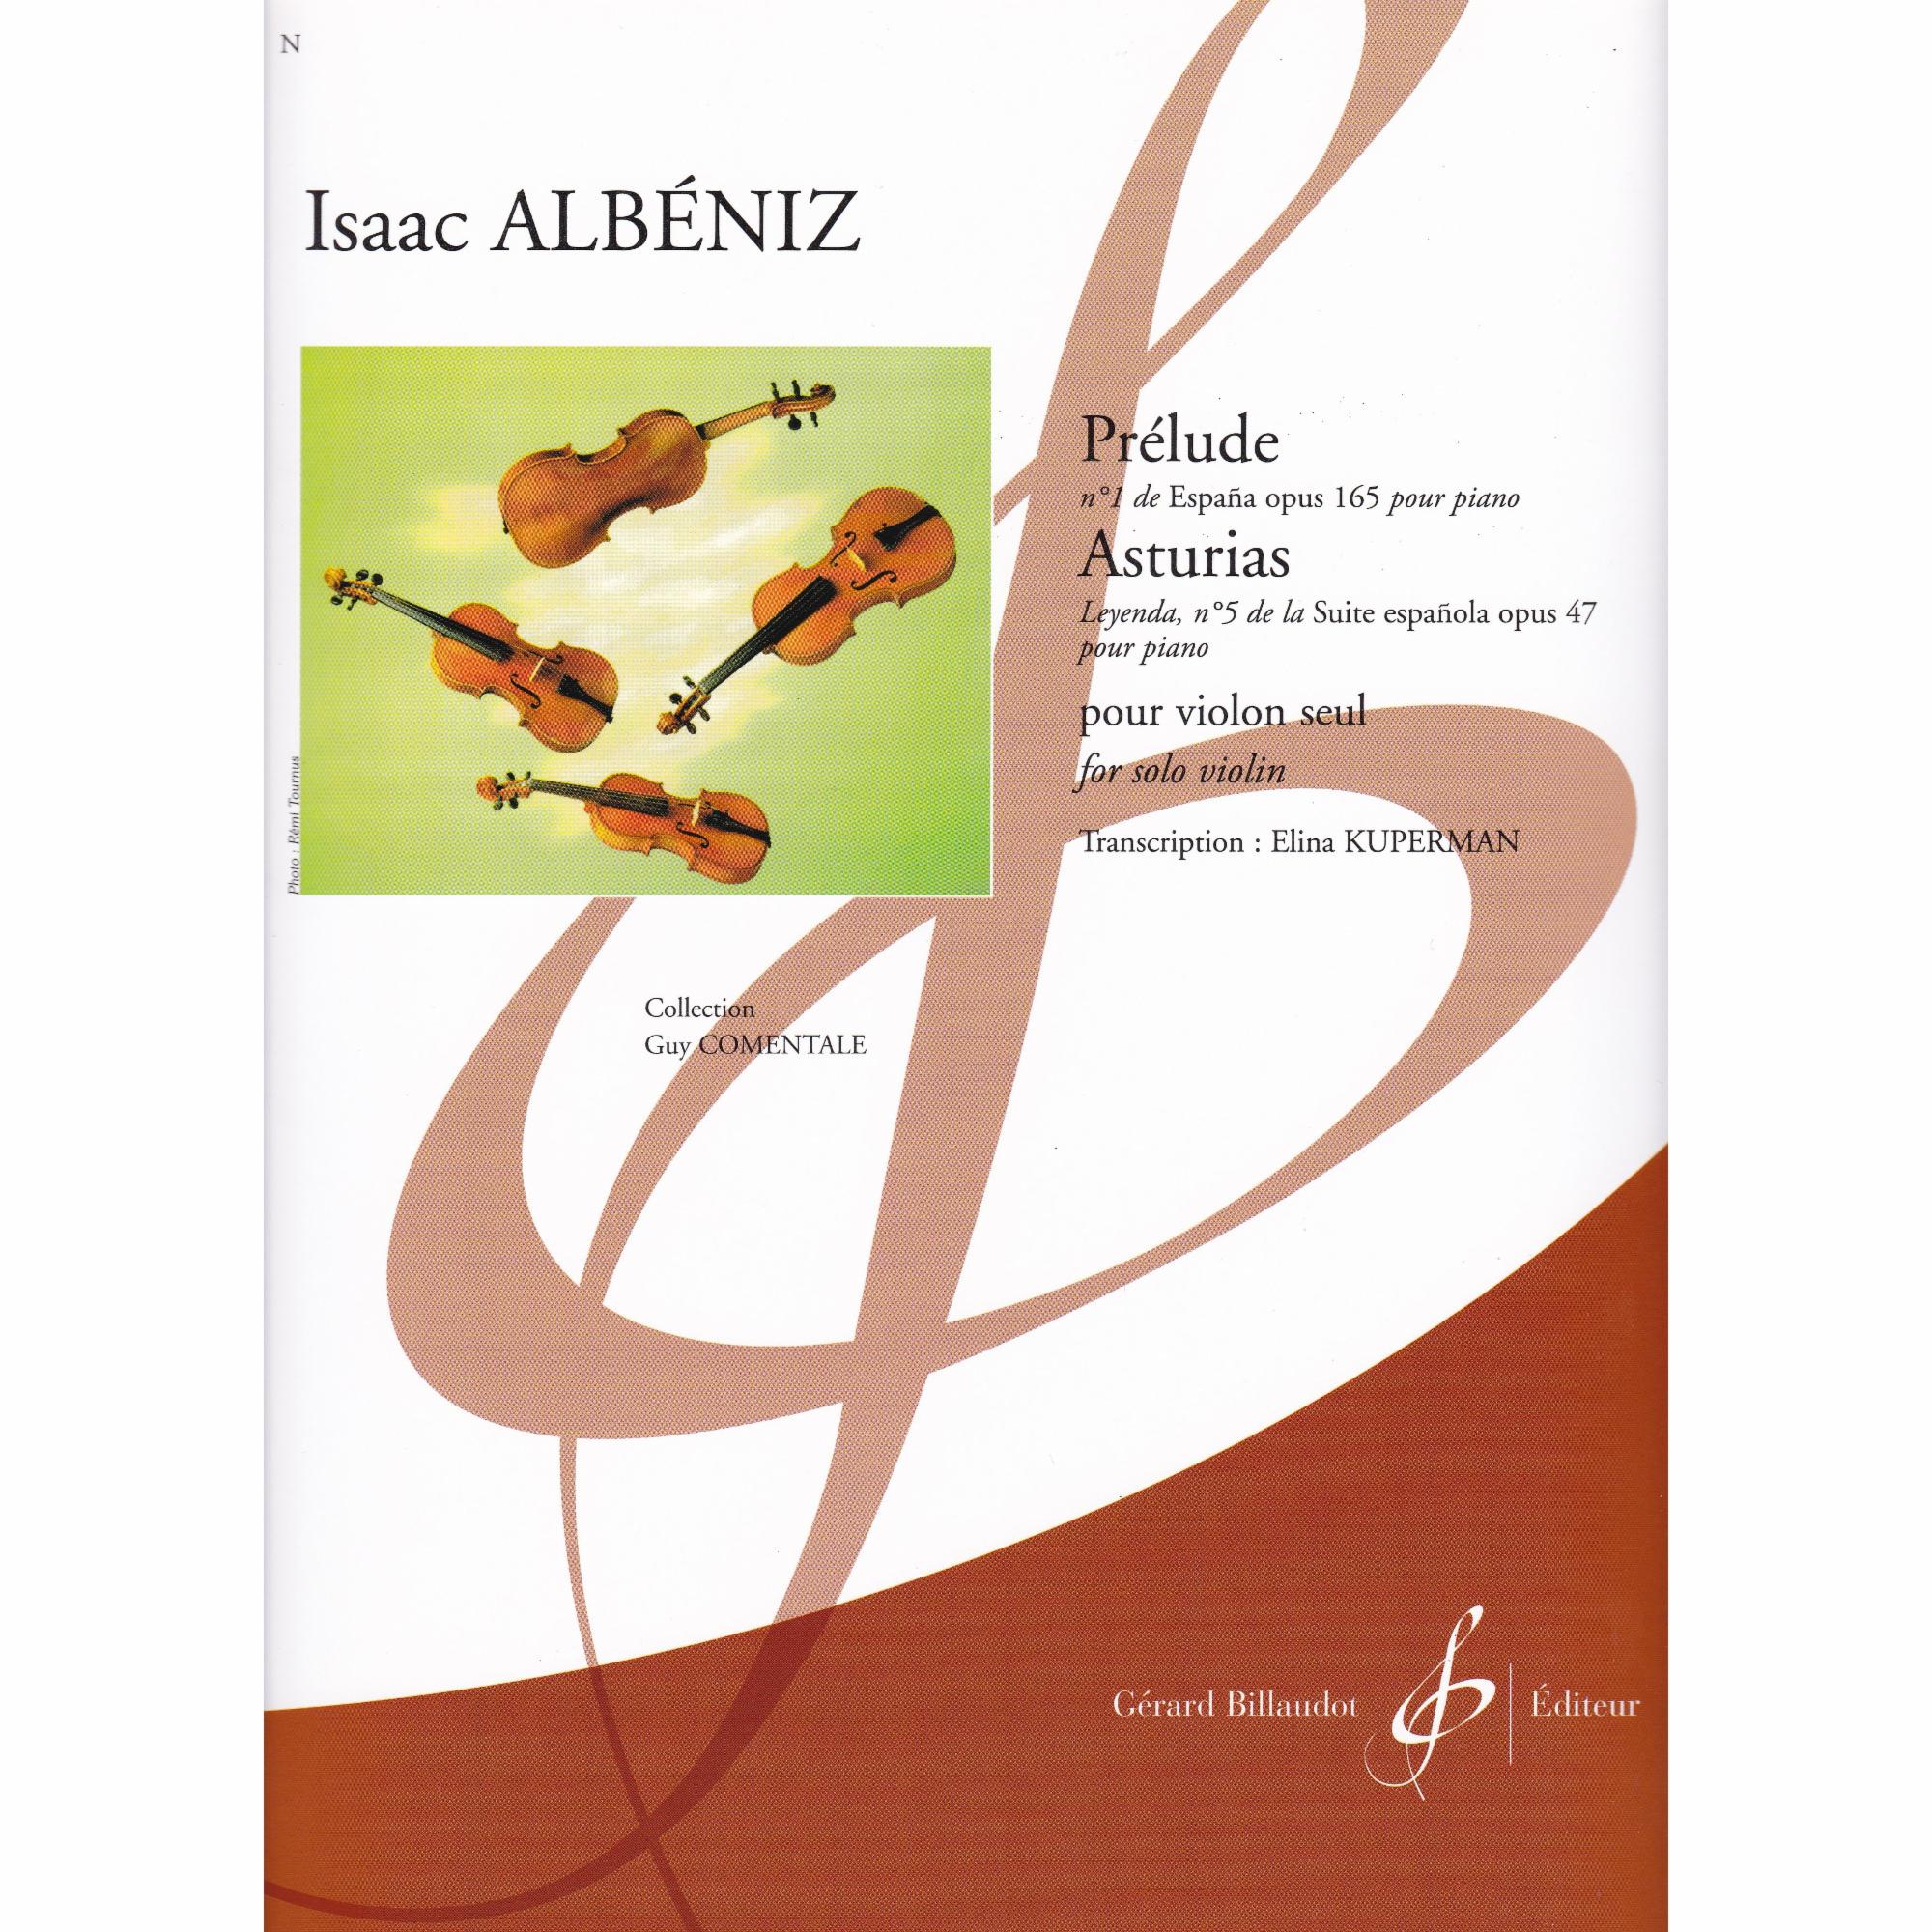 Prelude and Asturias for Solo Violin